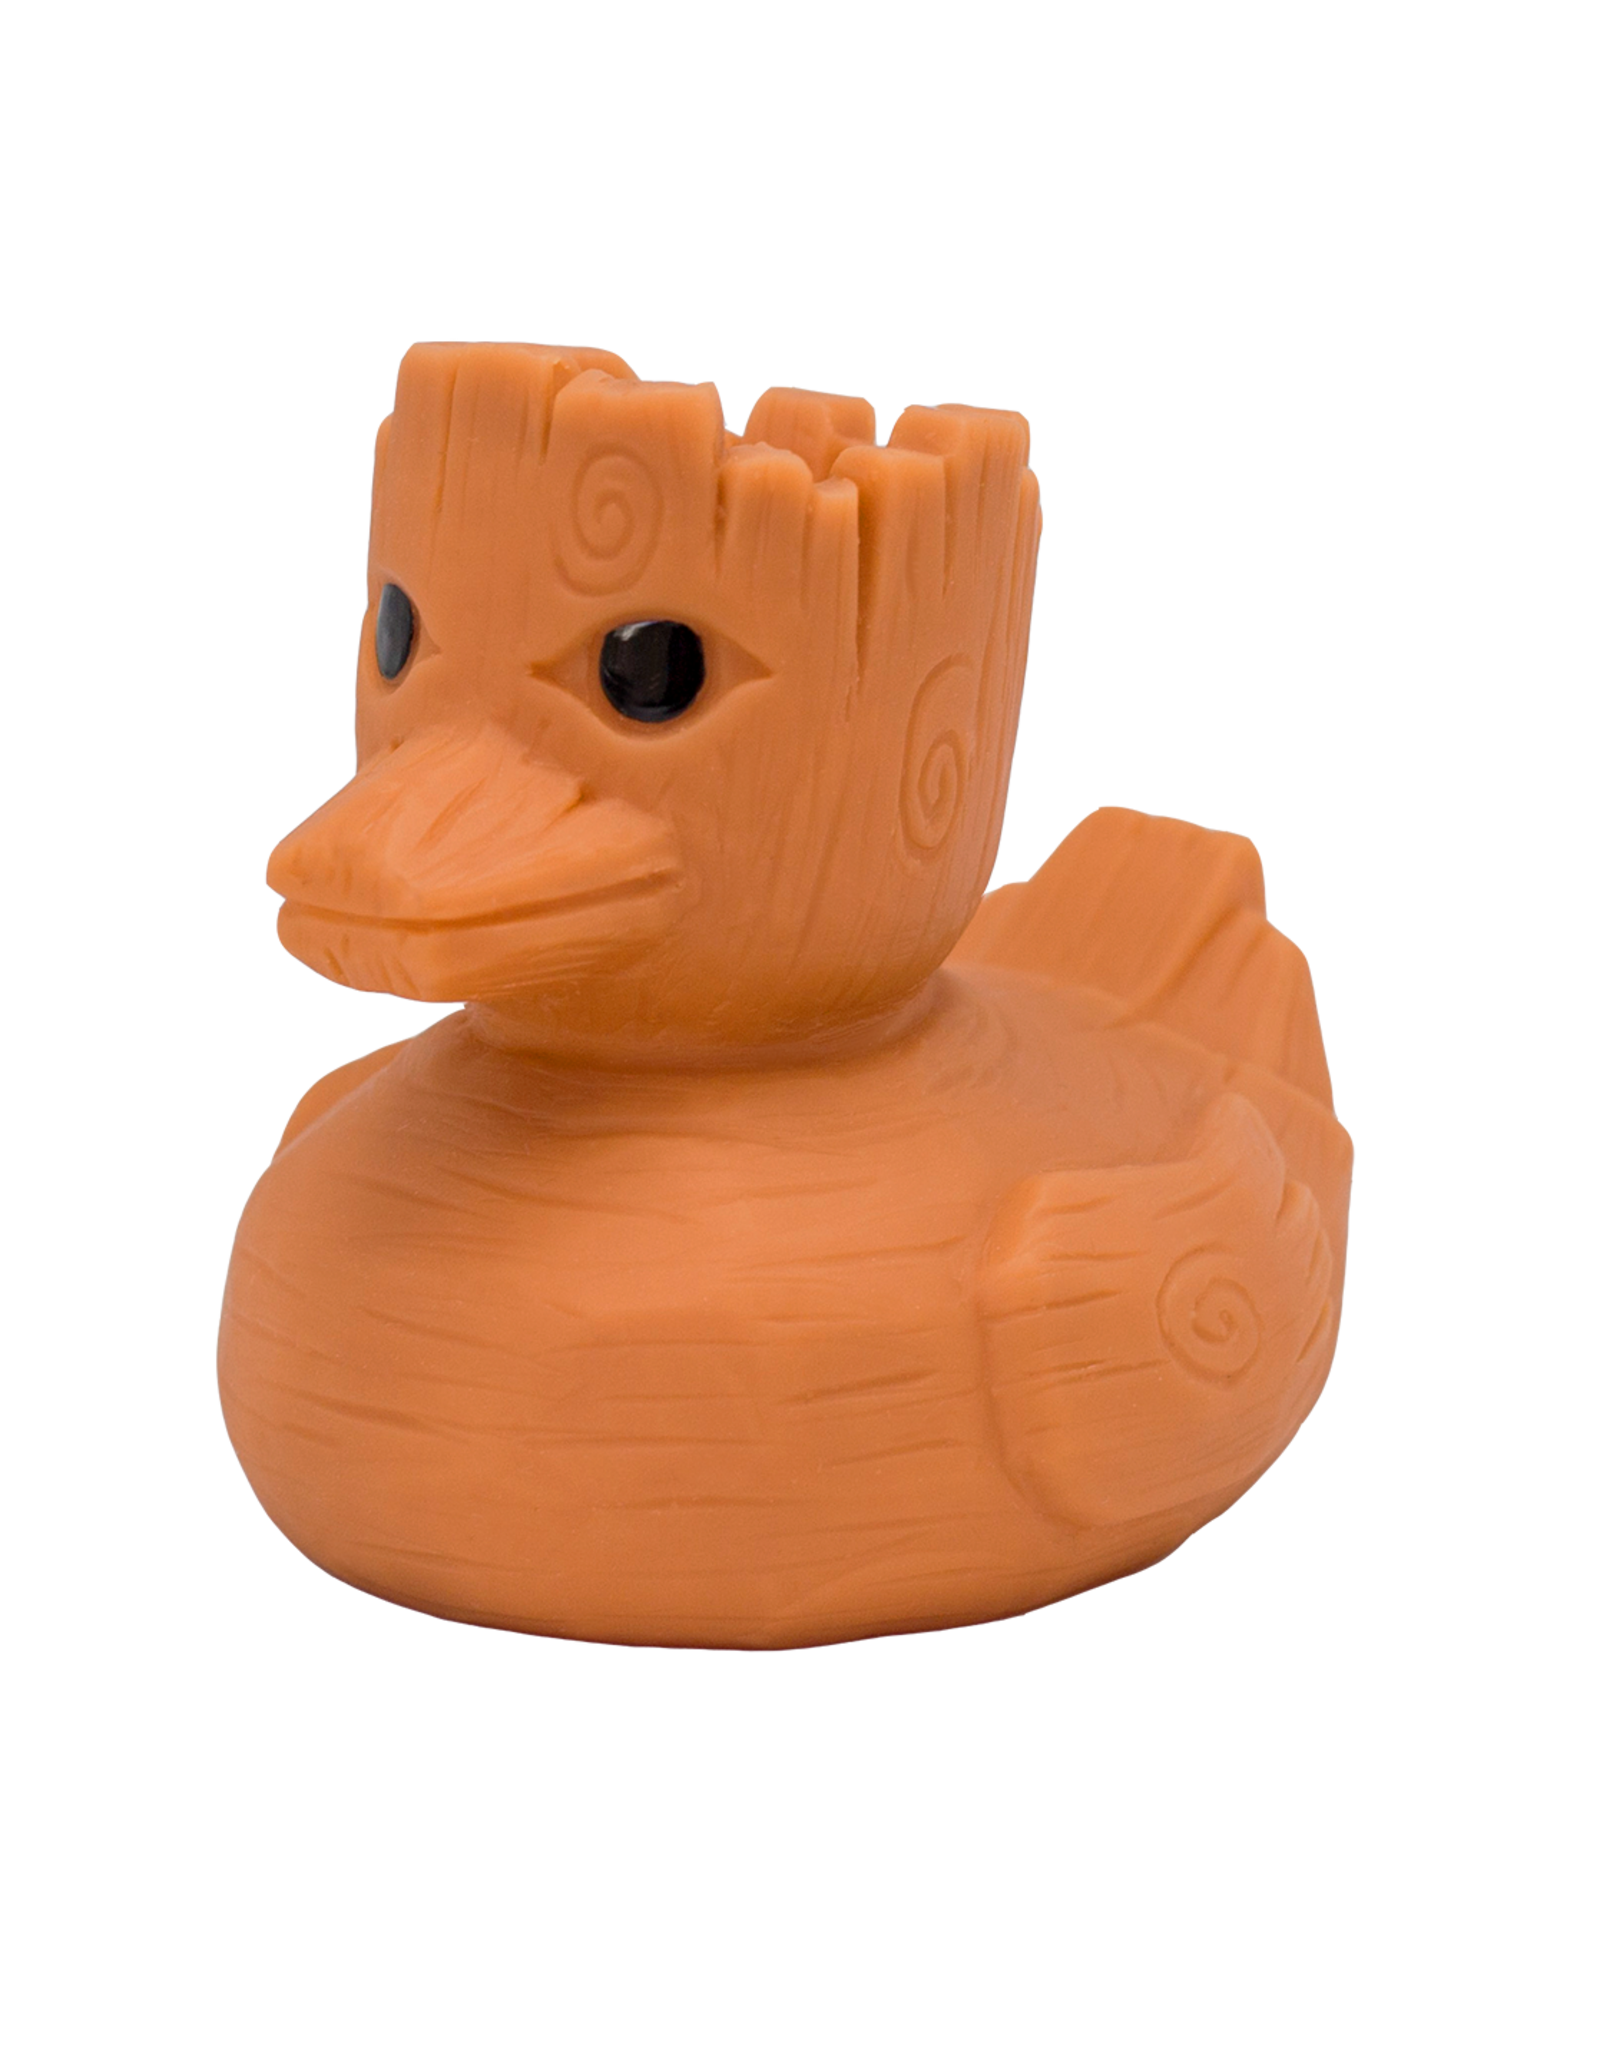 Lilalu Woody Rubber Duck